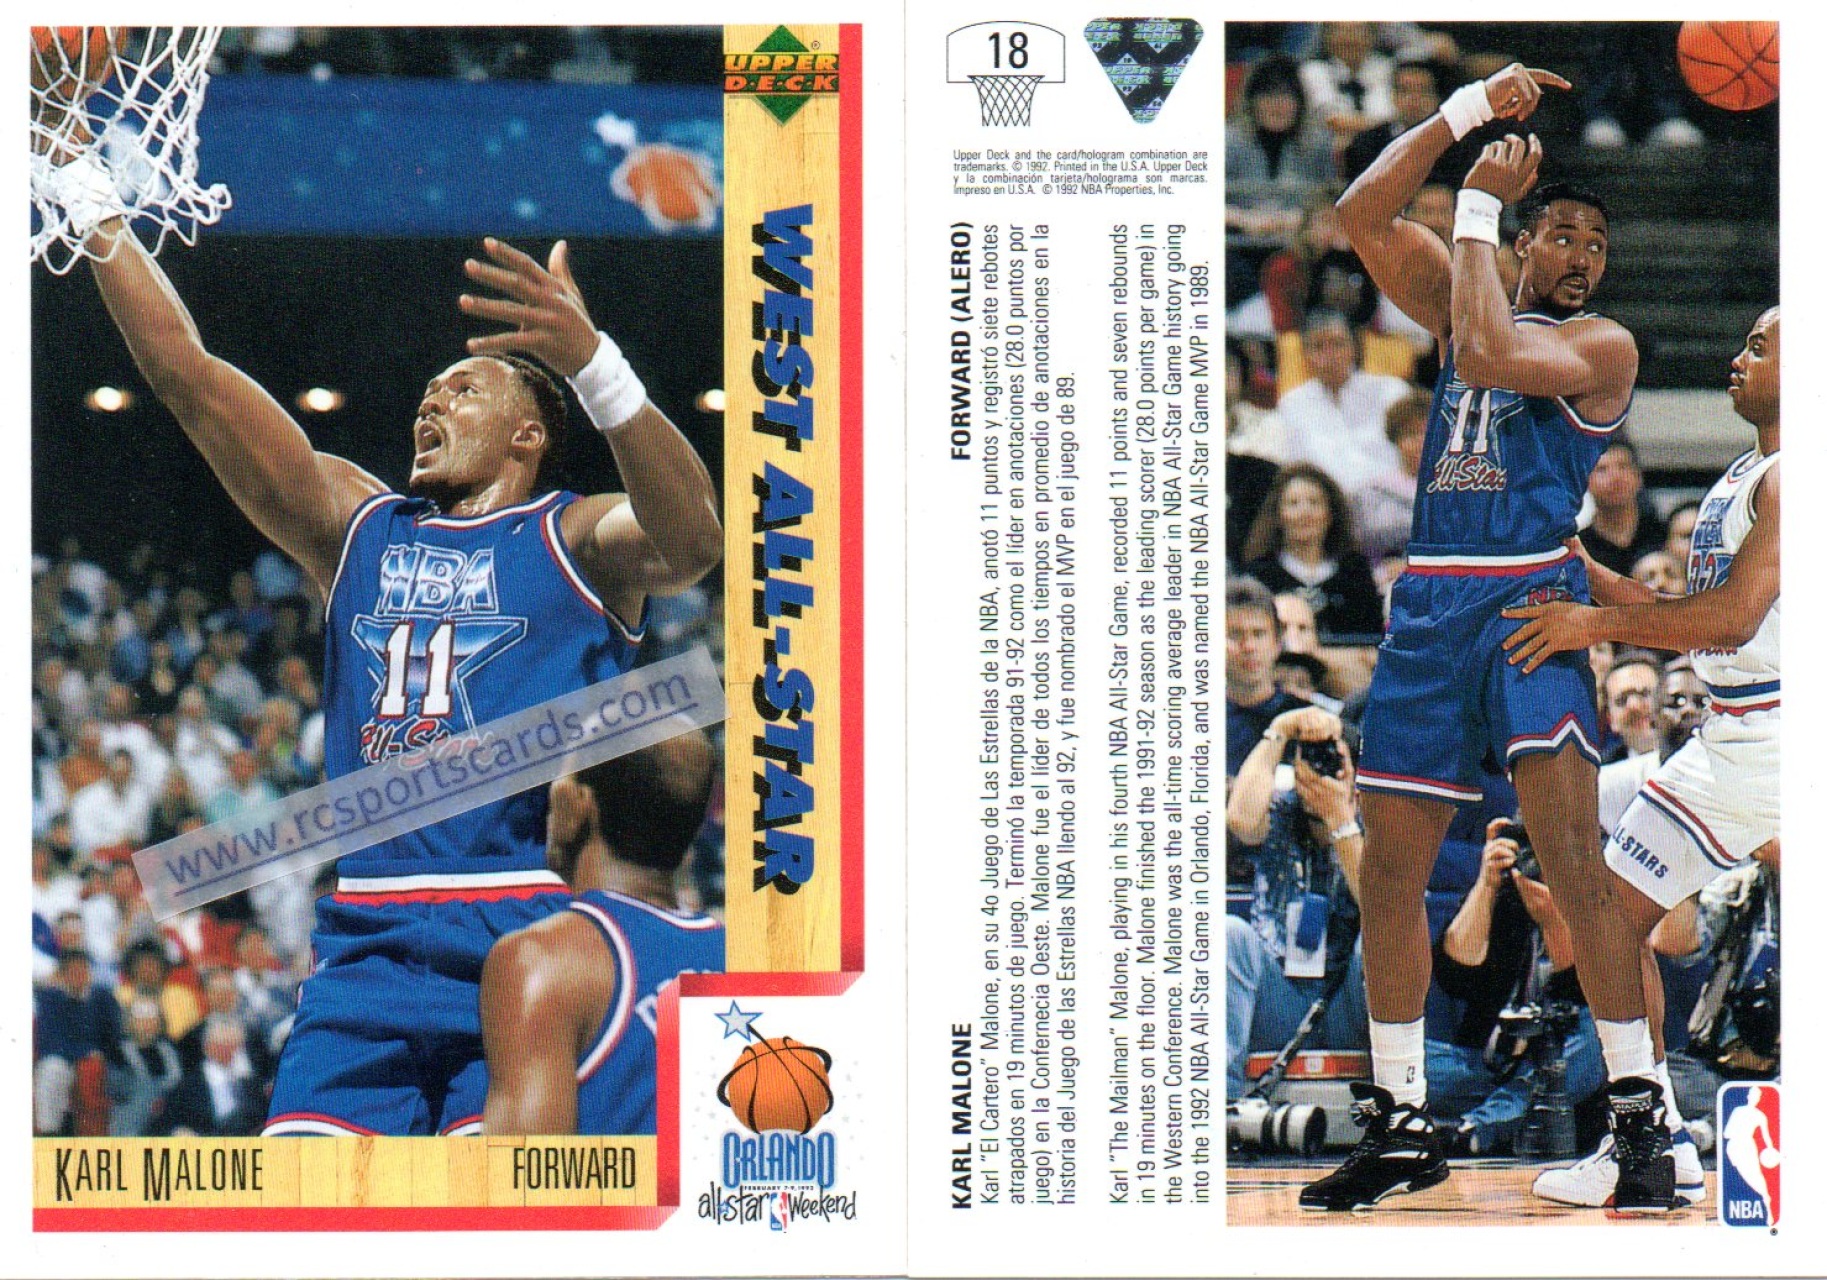 1991 Upper Deck Basketball Card #355 Karl Malone Utah Jazz #F45705